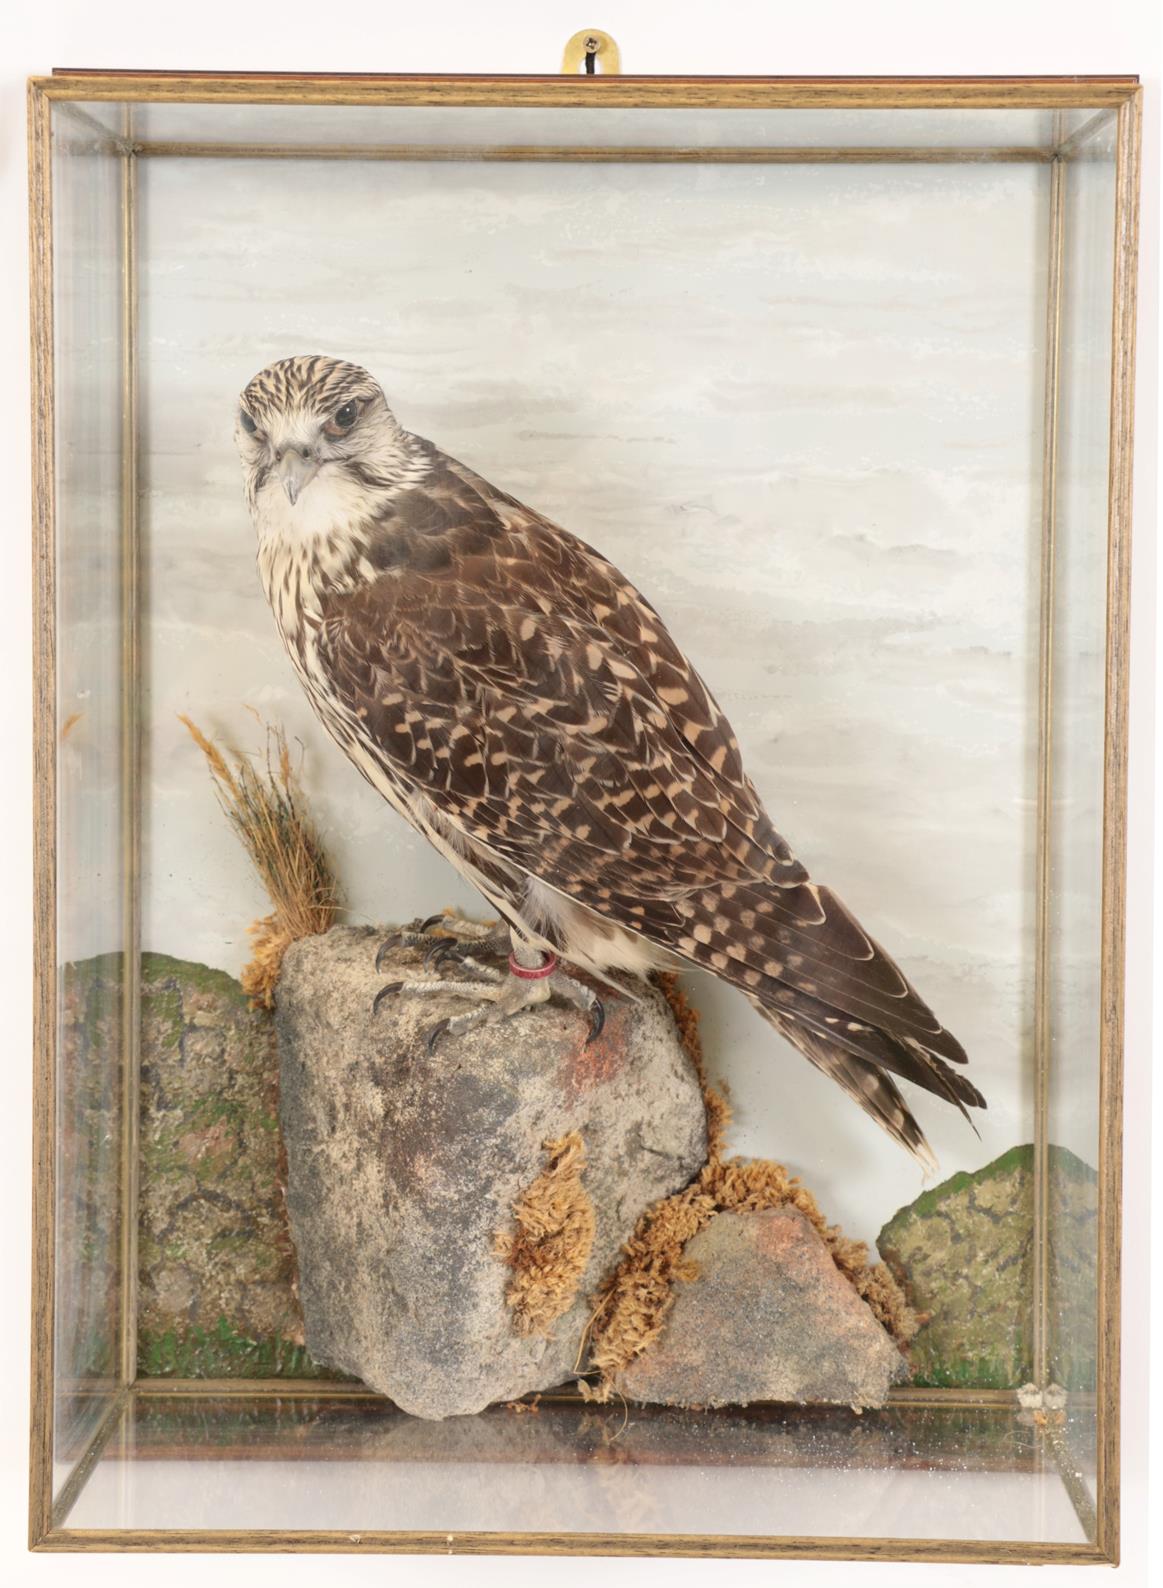 Taxidermy: A Wall Cased Gyr/Saker Falcon (Falco rusticolus), circa 2015, by Herbert Pearson,